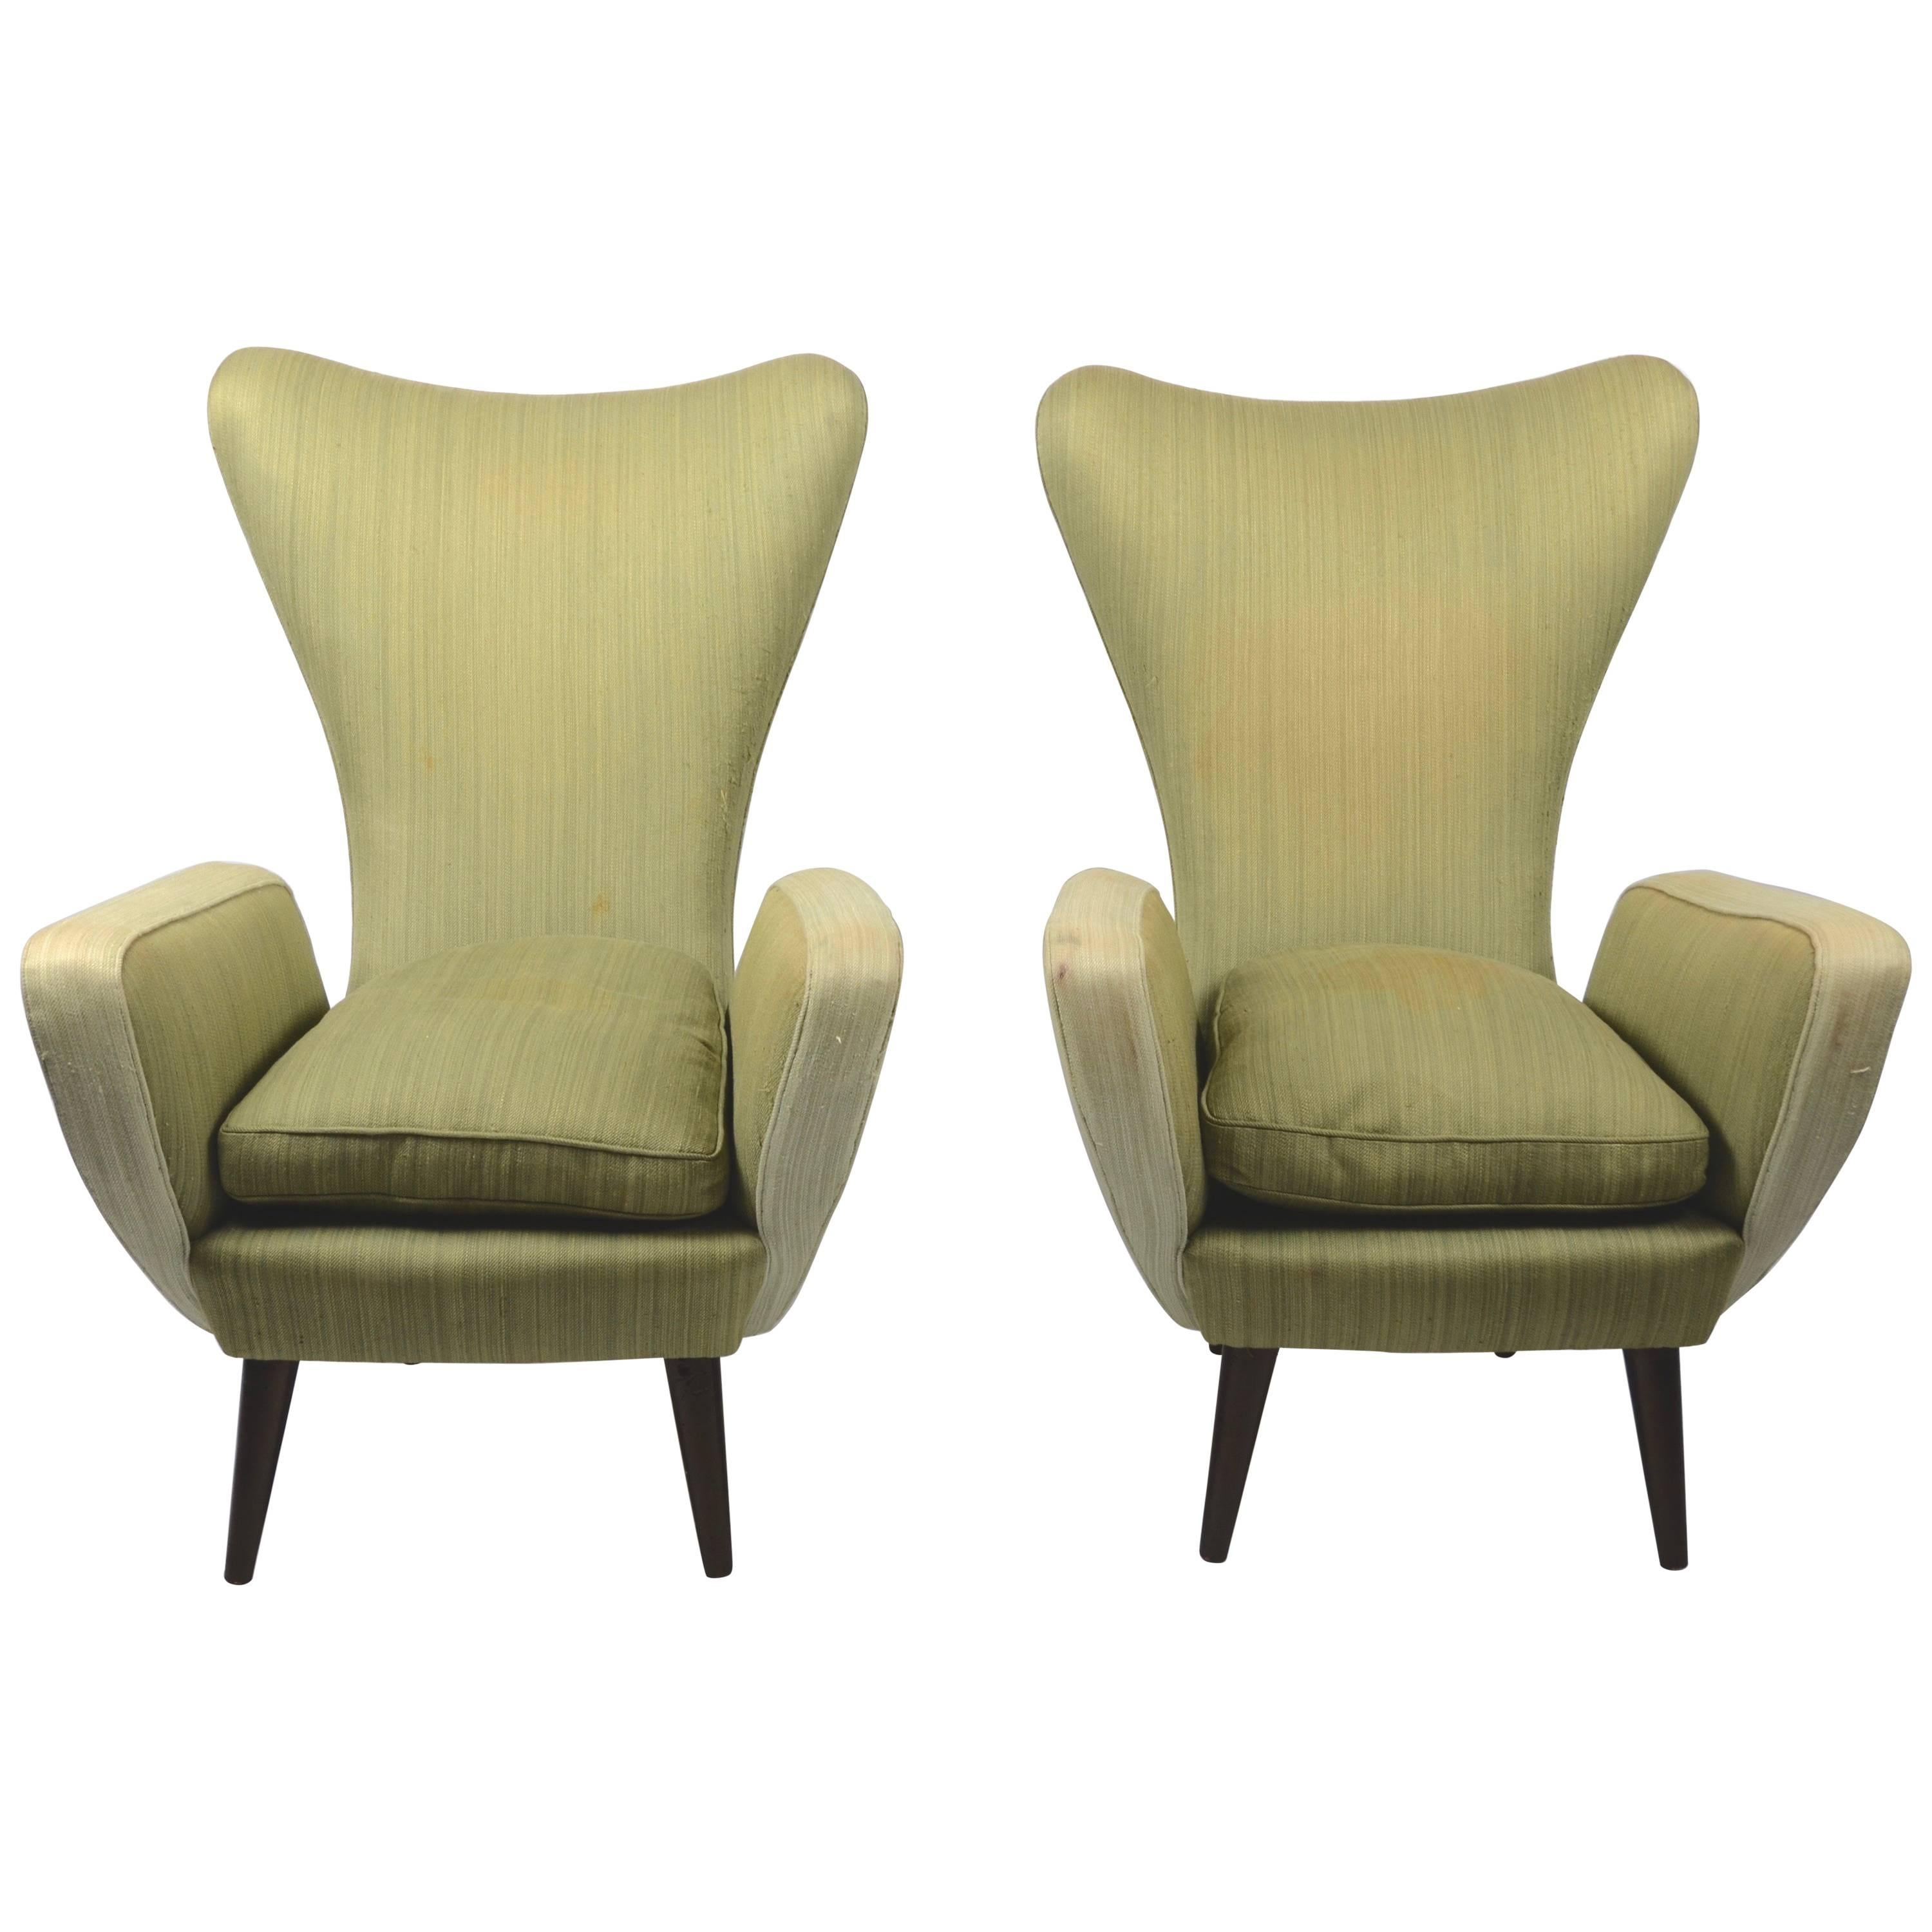 Pair of Lounge Chairs, Italian, 1950s